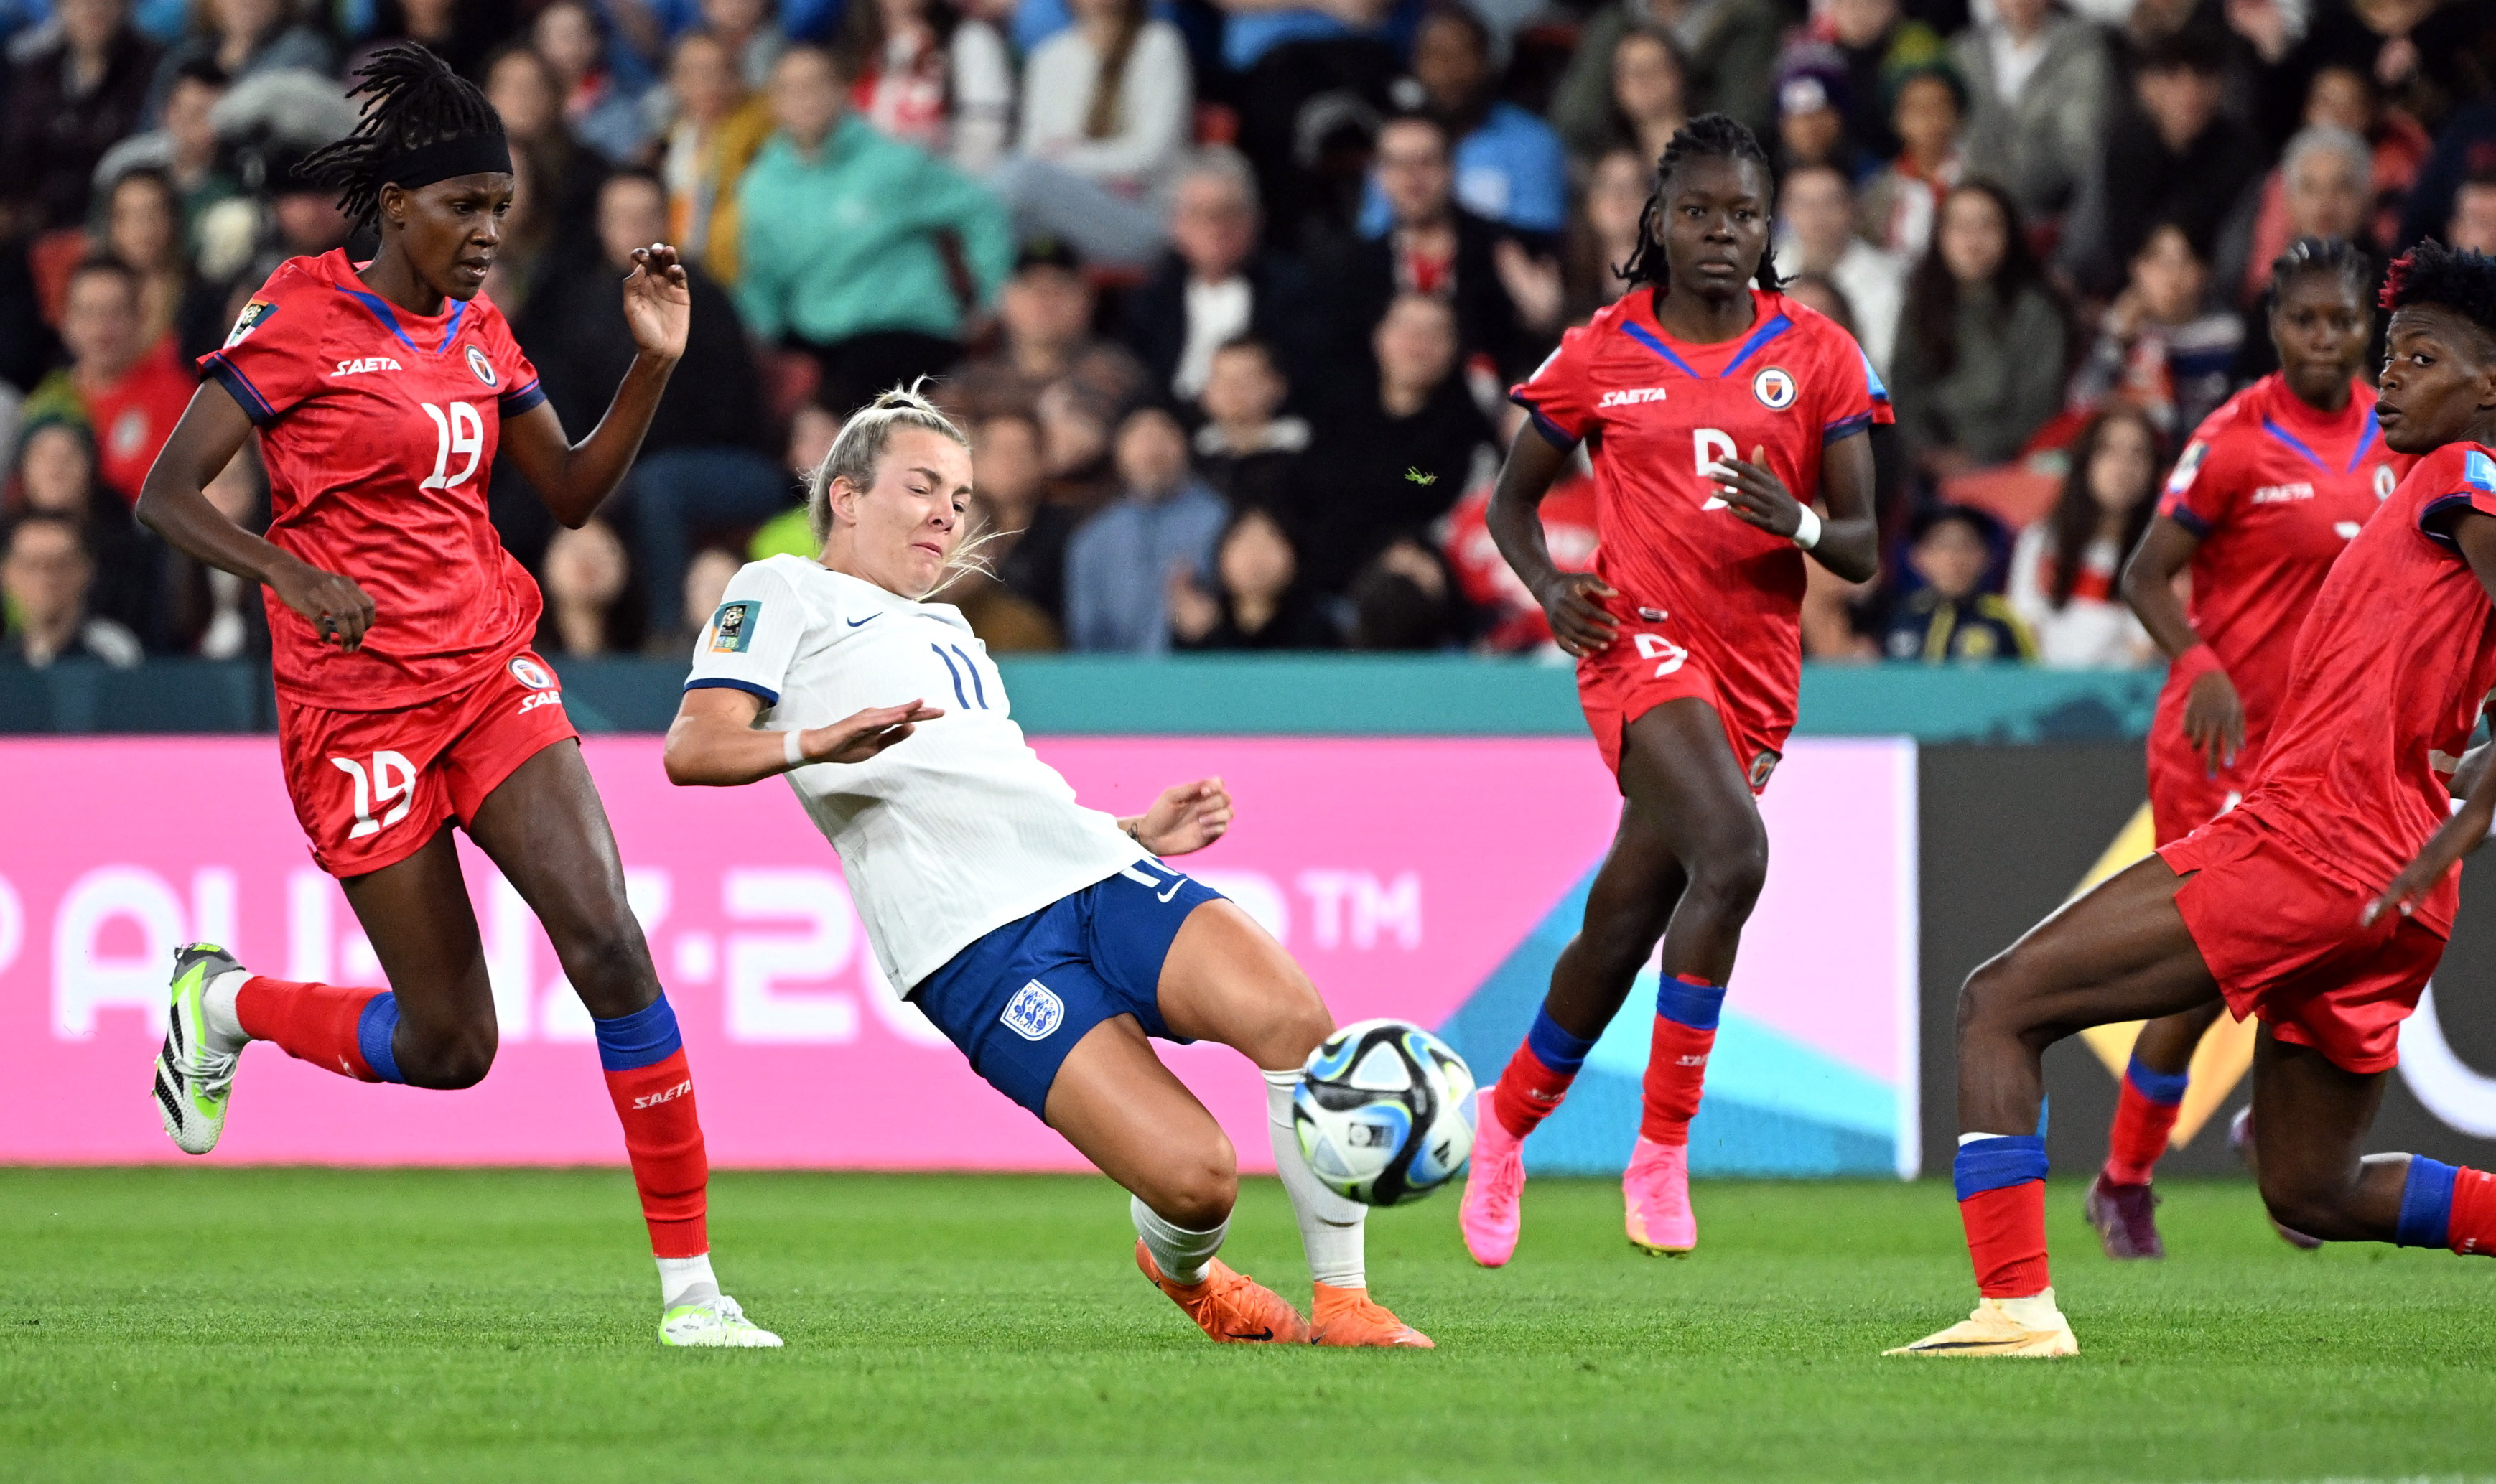 Mixed reviews from England's 1-0 World Cup opener vs upstart Haiti